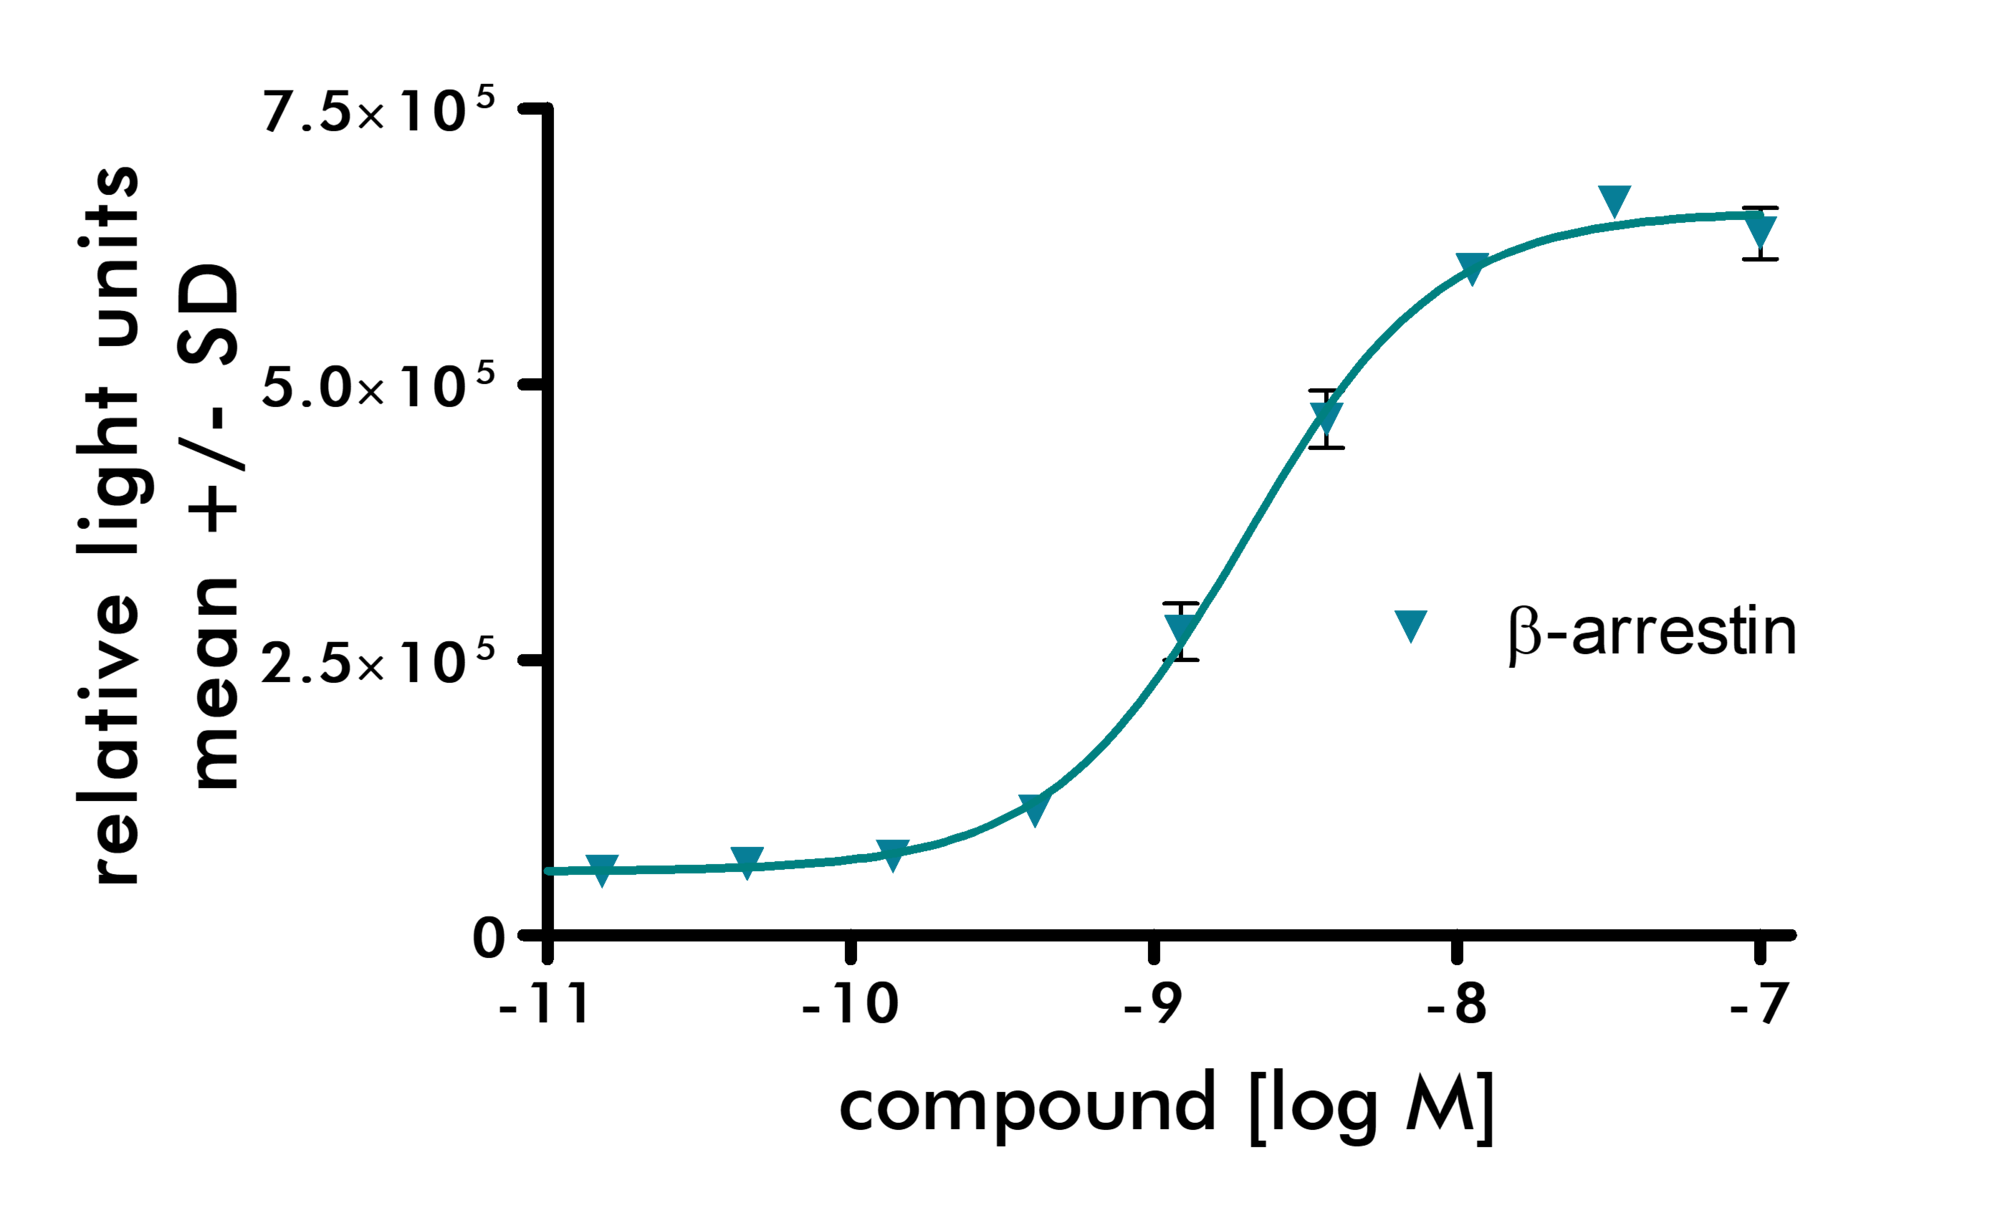 beta arrestin dose response curve as example for GPCR compound screening